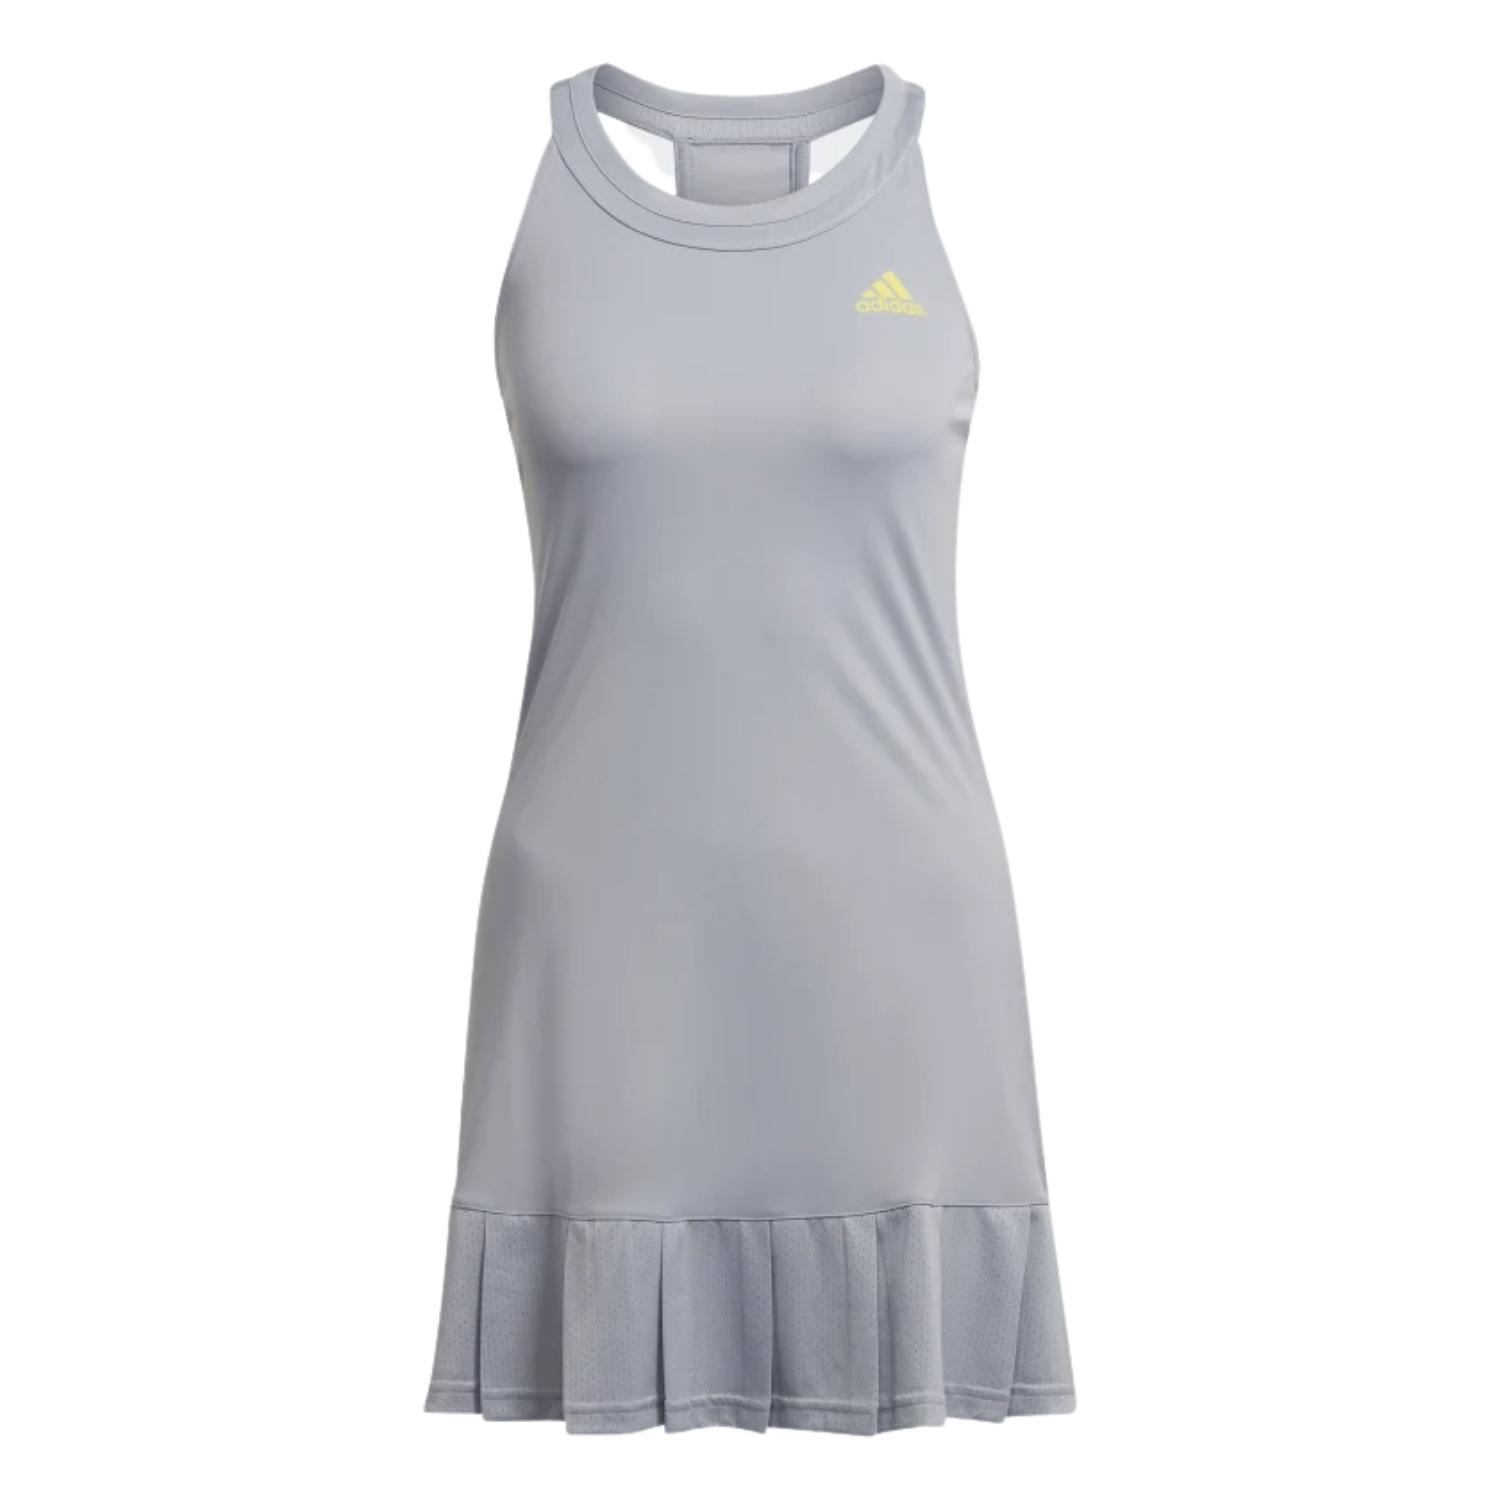 Tenniskjoler | Stort udvalg af kjoler til tennis her hos Tennisshoppen!